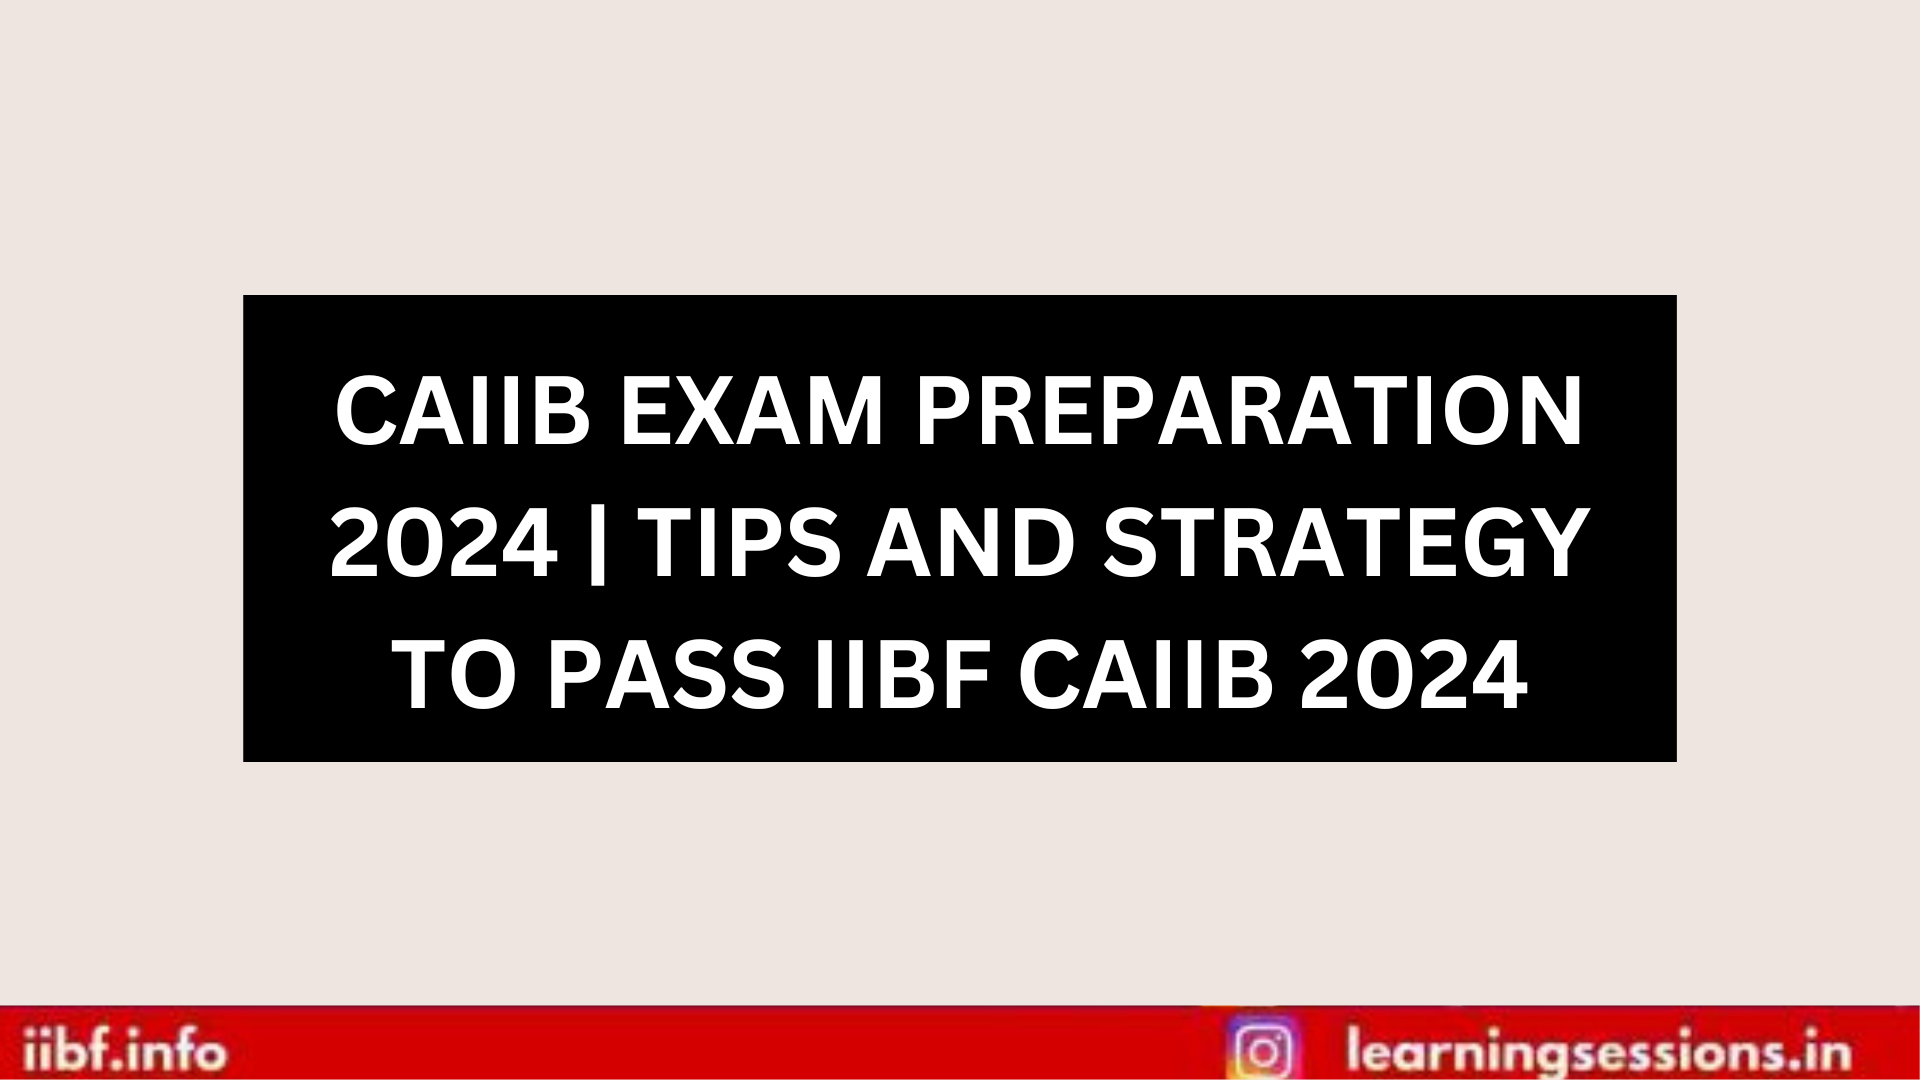 CAIIB EXAM PREPARATION 2024 | TIPS AND STRATEGY TO PASS IIBF CAIIB 2024